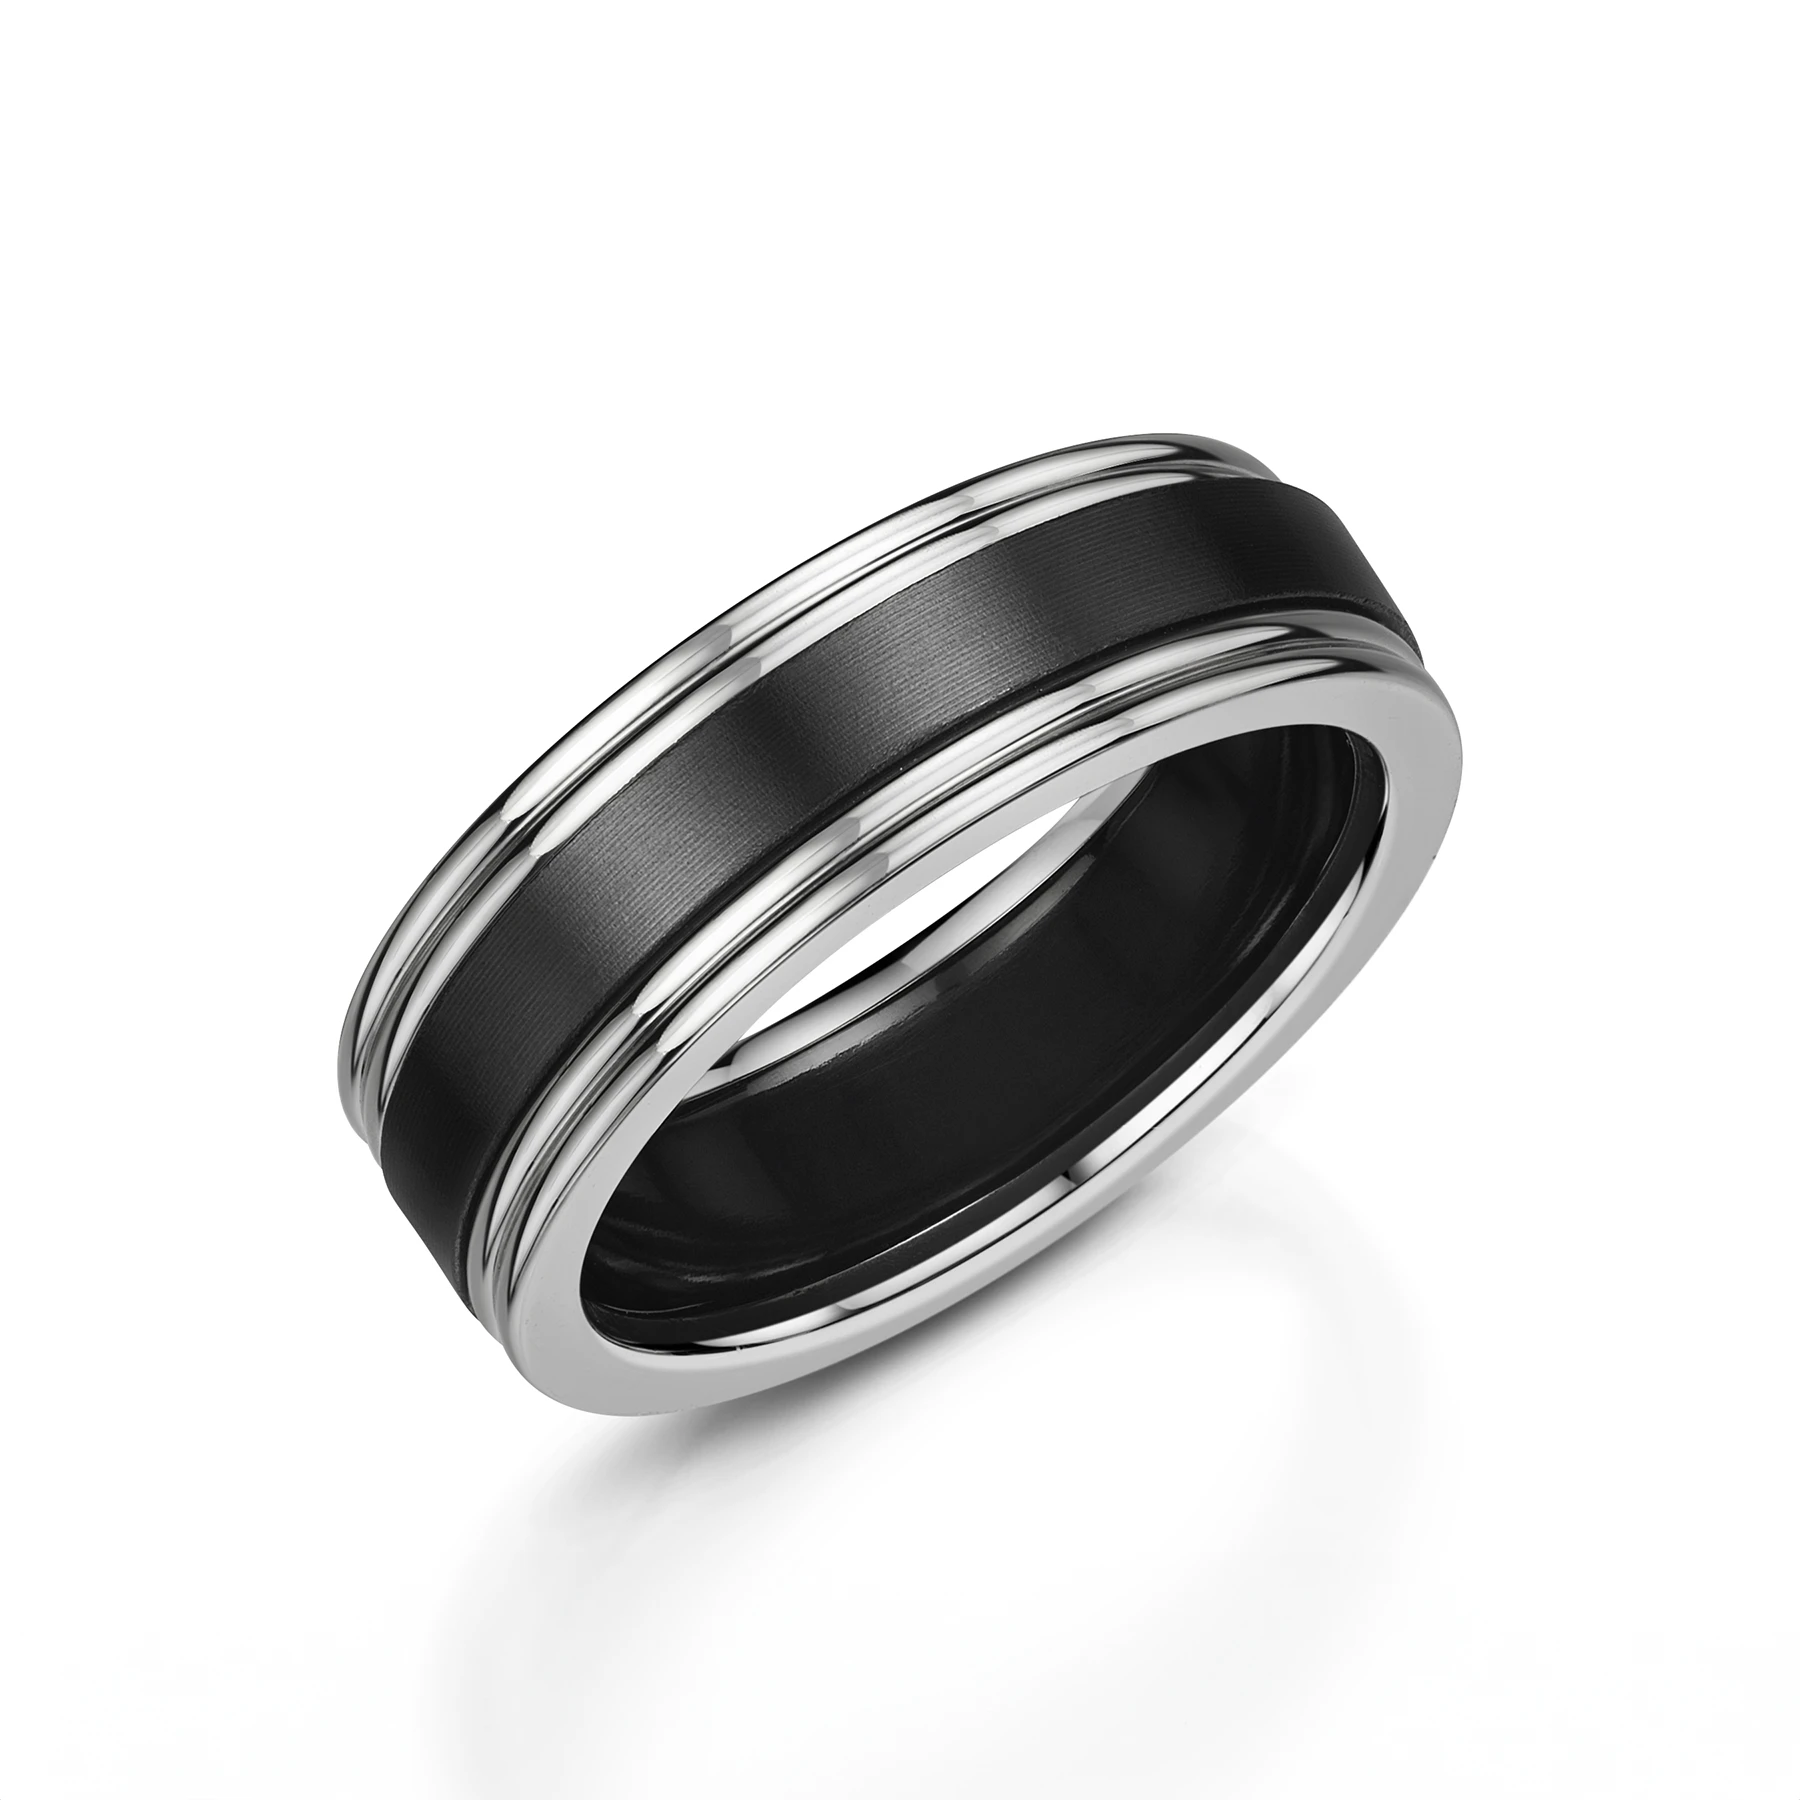 Matte Black Zirconium Wedding Ring with White Gold Edges